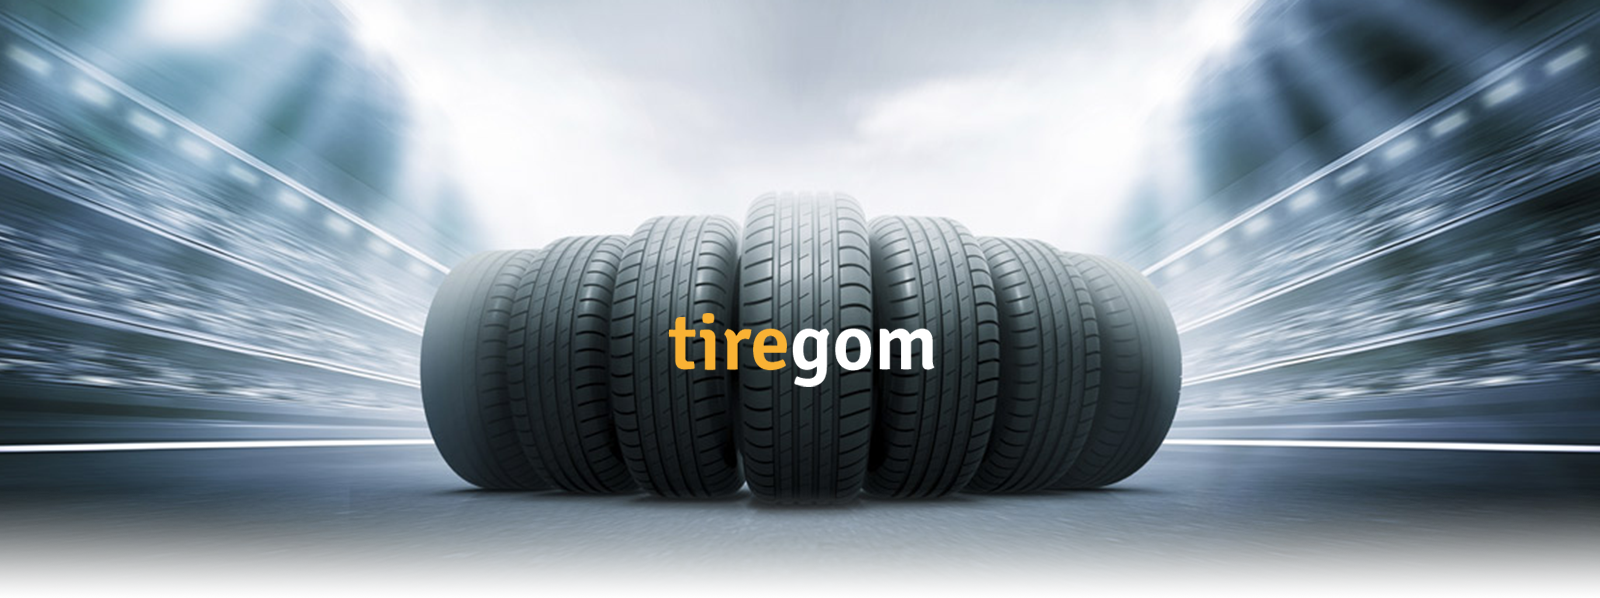 Tiregom.be : comparateur de pneus